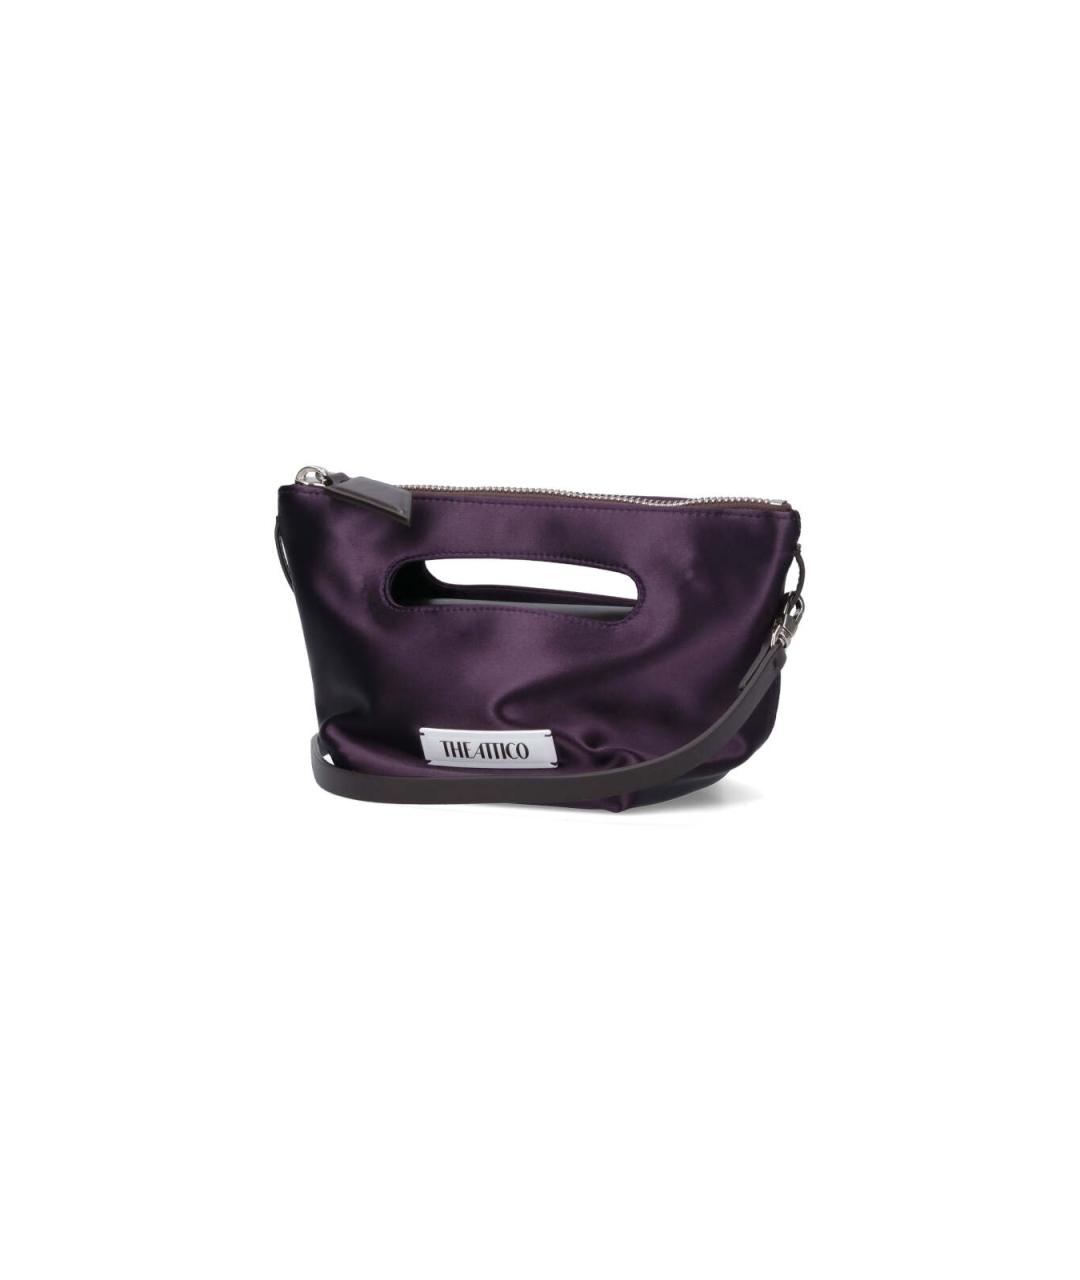 THE ATTICO Фиолетовая сумка с короткими ручками, фото 2